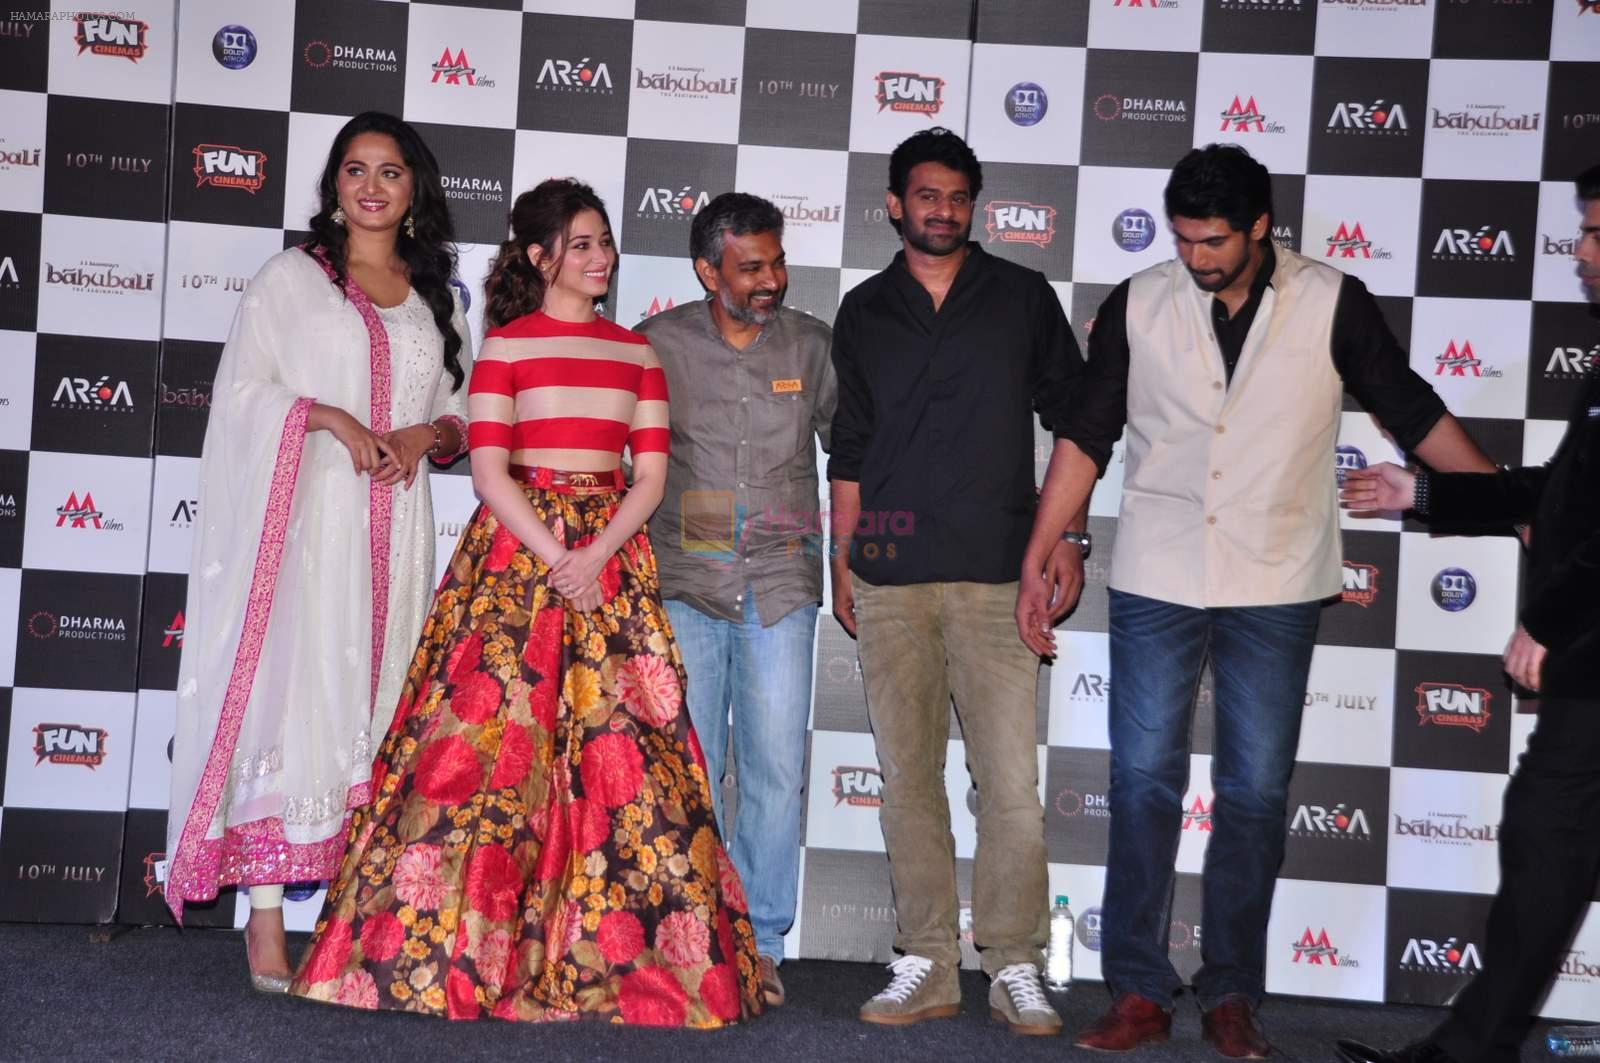 Anushka Shetty, Tamannaah Bhatia, S.S. Rajamouli, Karan Johar, Prabhas, Rana Daggubati at Bahubhali trailor launch in Mumbai on 1st June 2015